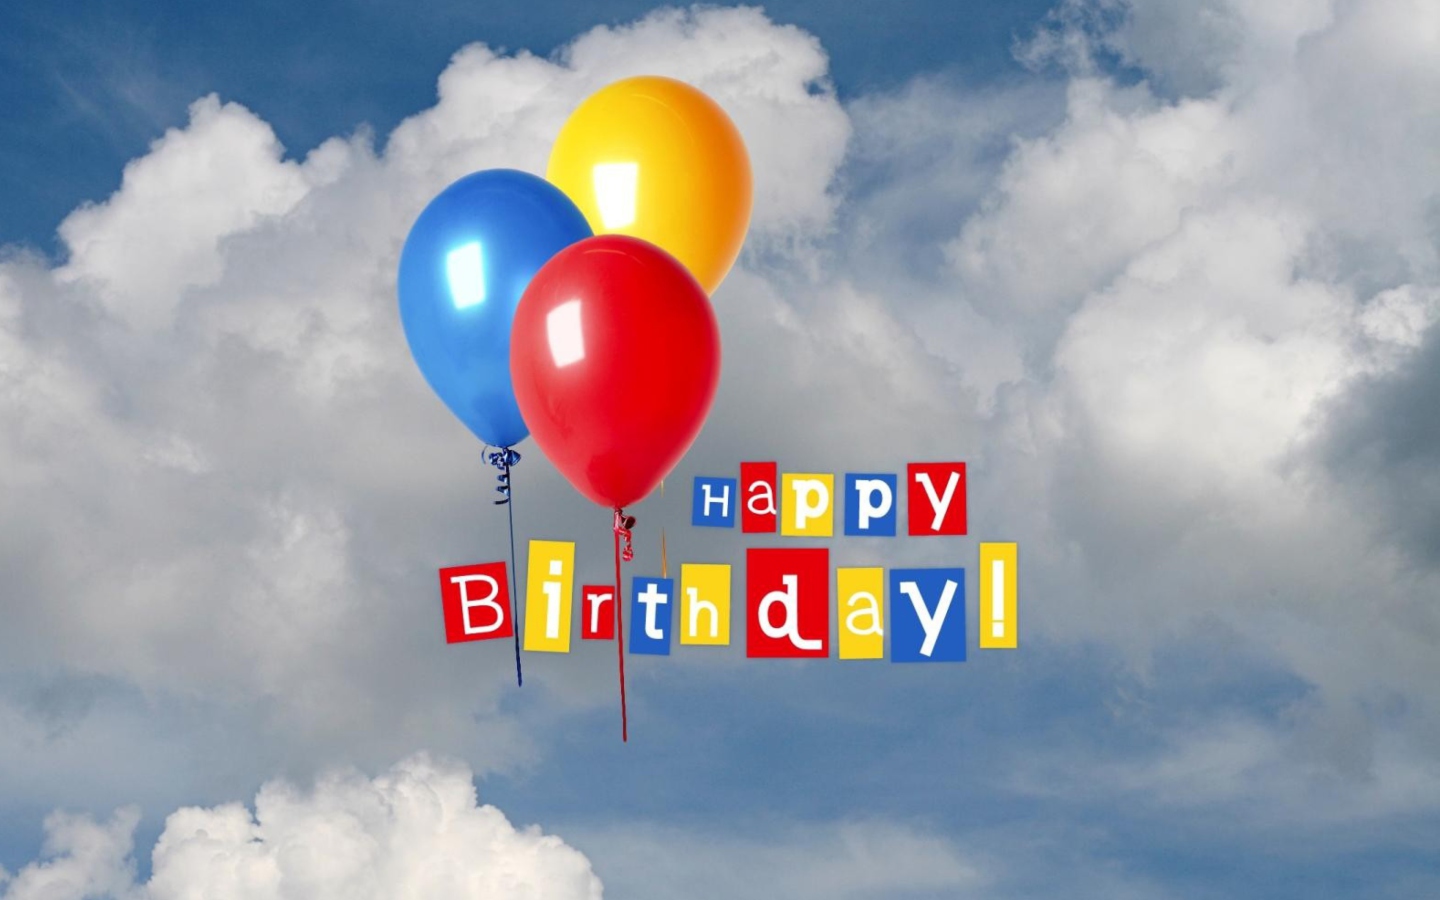 Happy Birthday Balloons wallpaper 1440x900